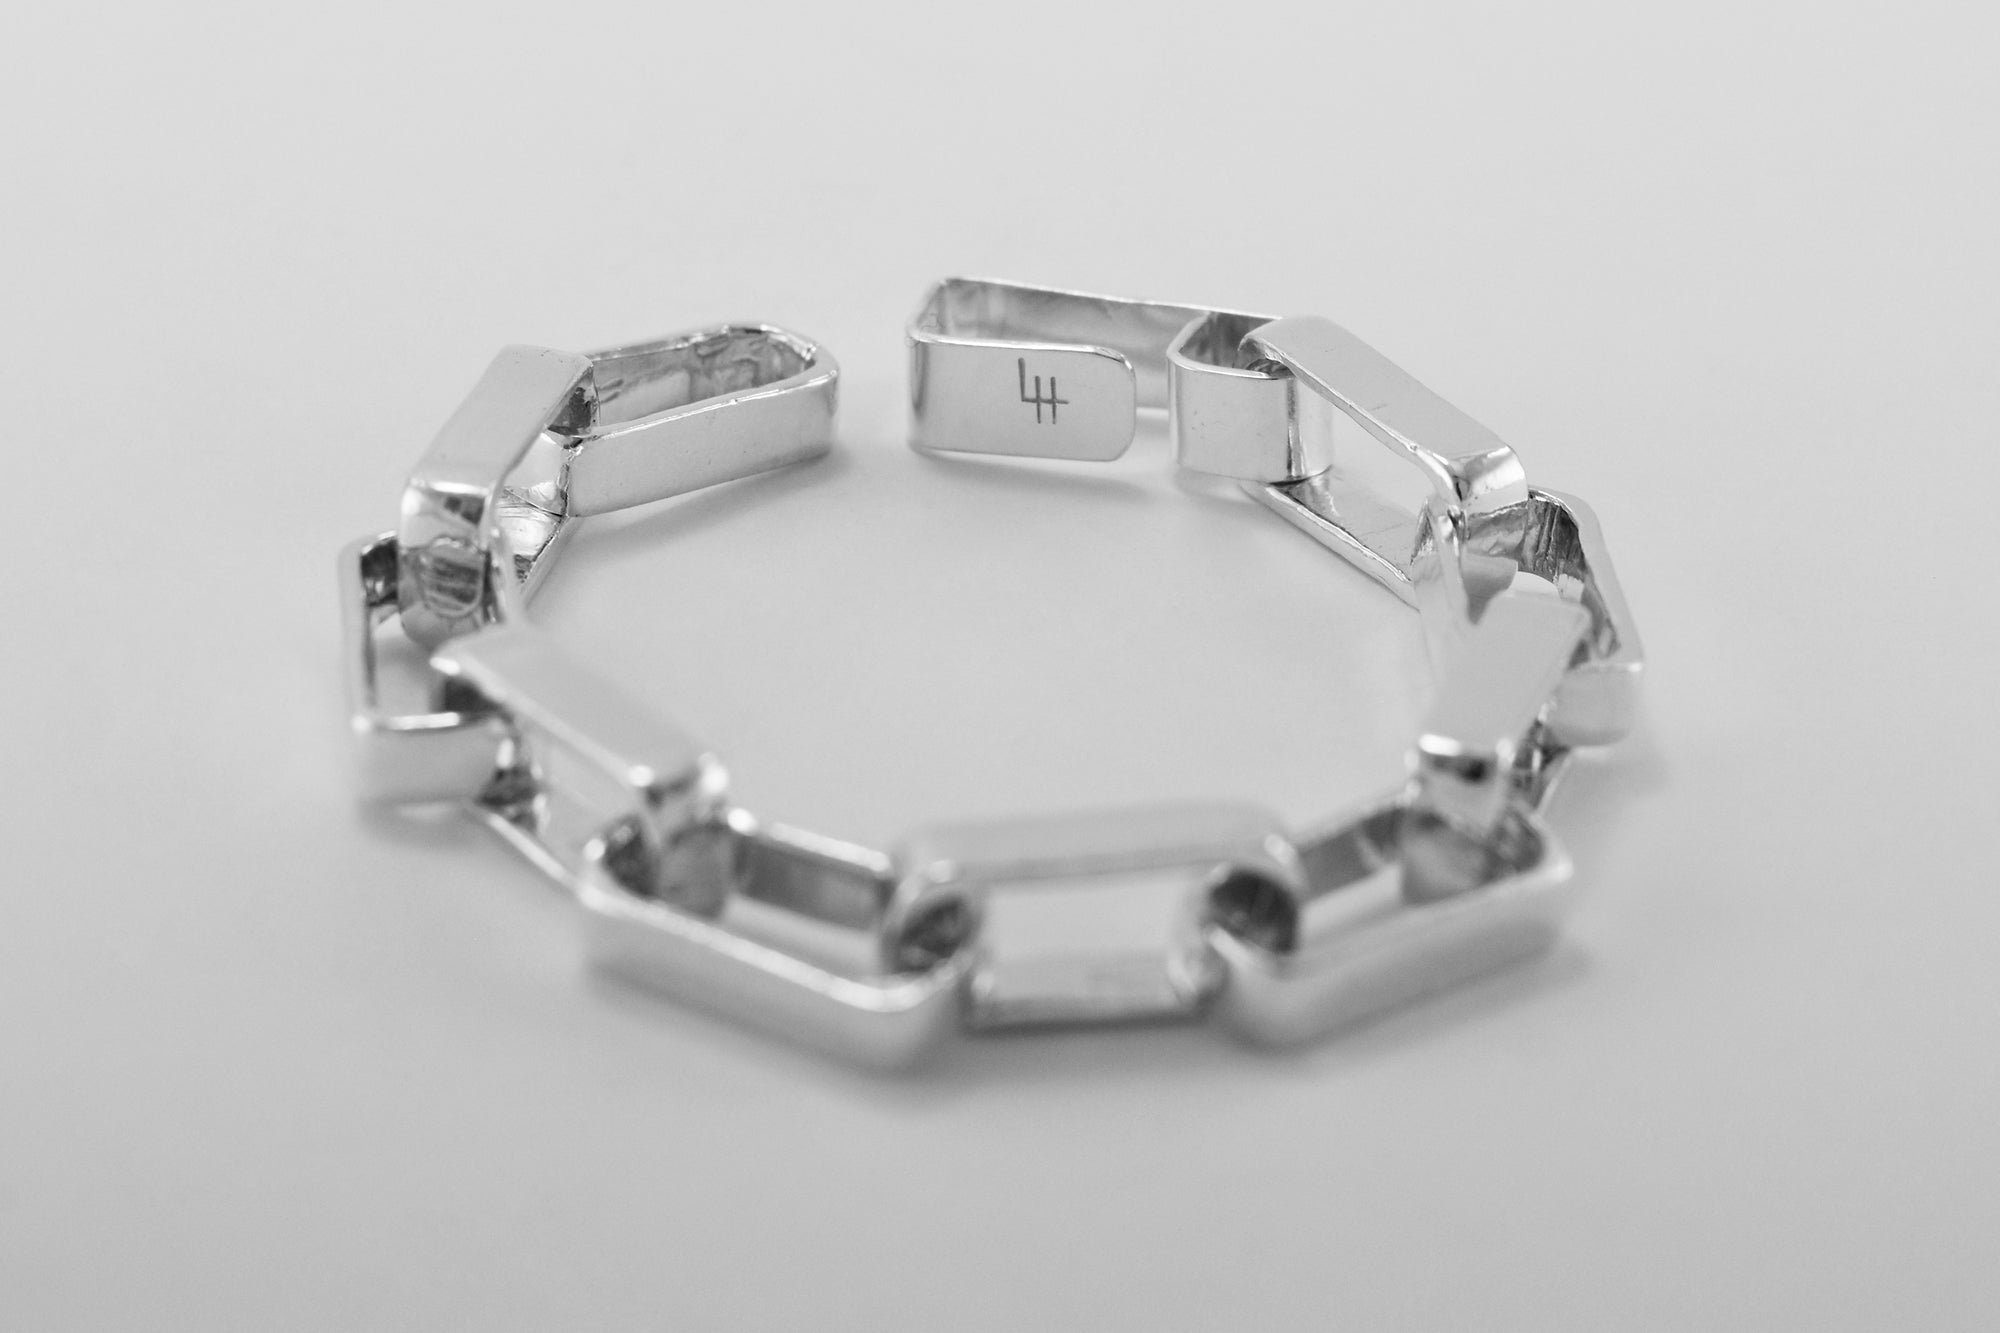 Louis Vuitton Monogram Carved Ring